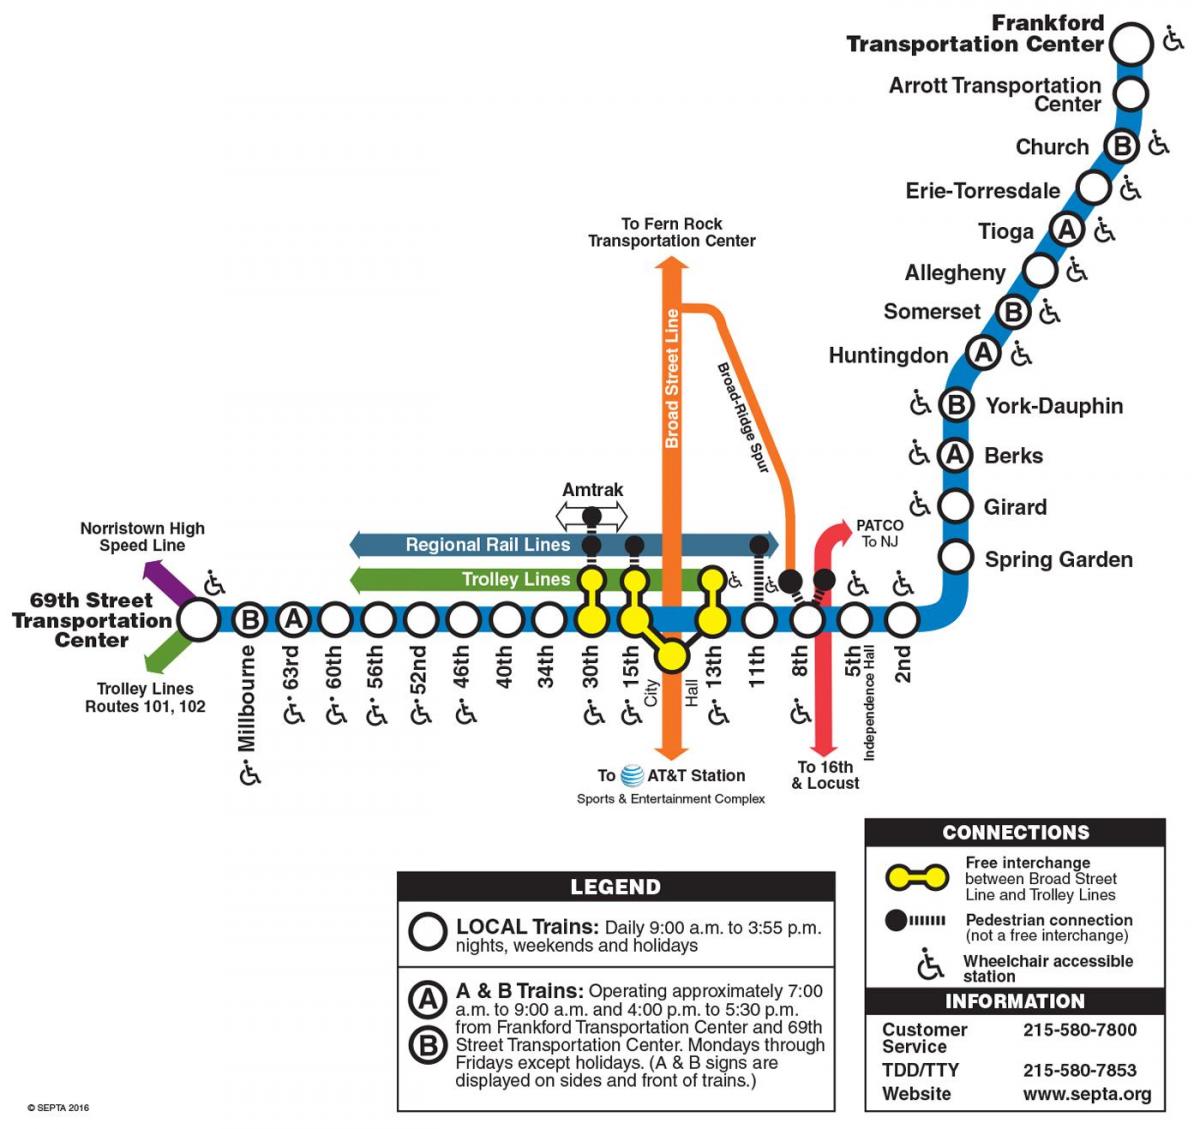 mapa tržištu frankford liniji